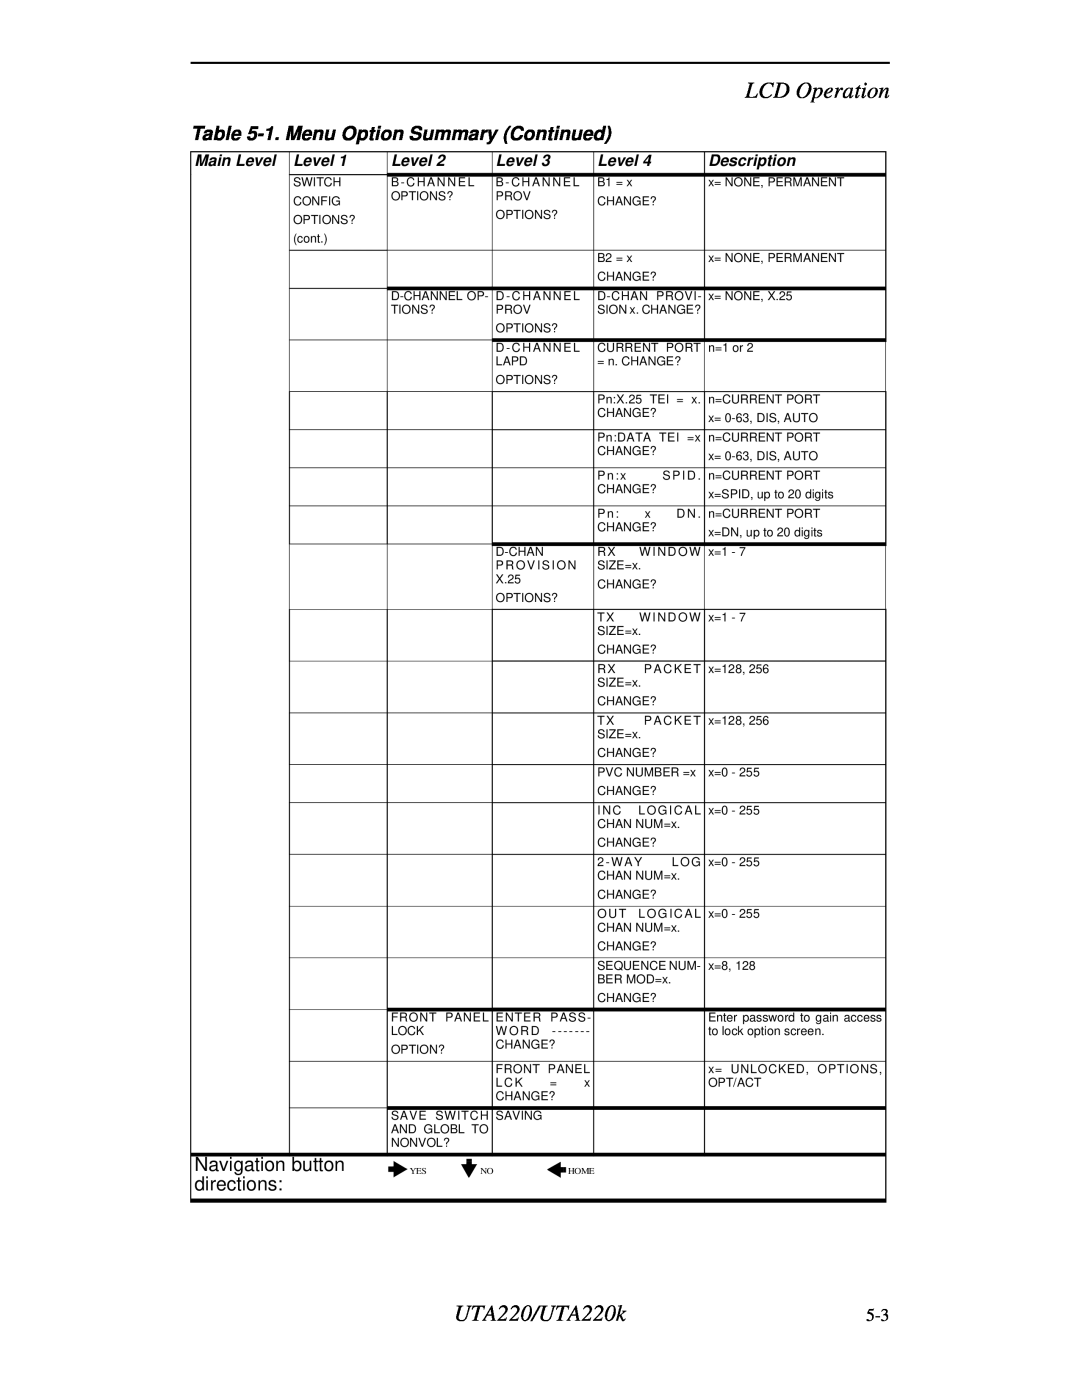 Northern UTA220/UTA220k manual 1. Menu Option Summary Continued, LCD Operation, Main Level, Description 